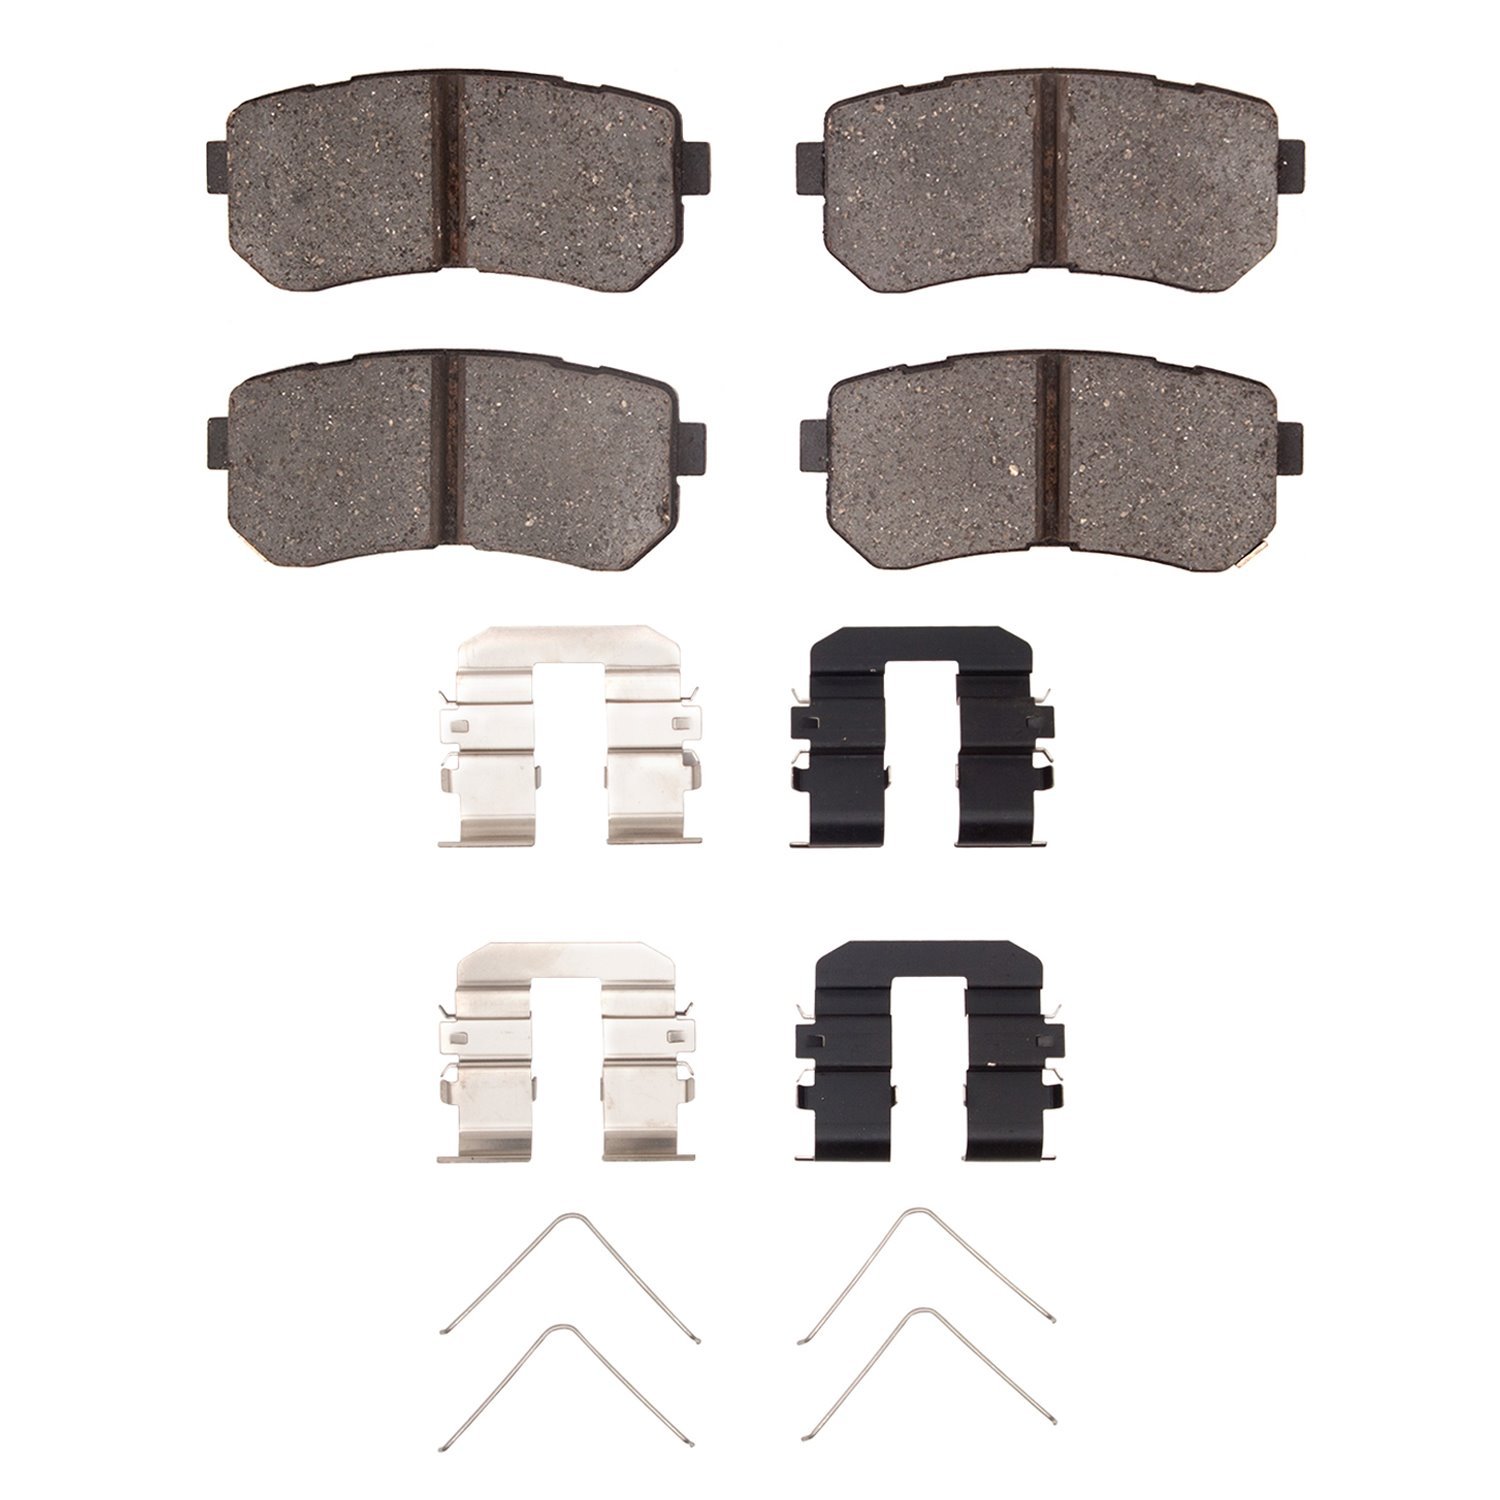 1310-2188-01 3000-Series Ceramic Brake Pads & Hardware Kit, Fits Select Kia/Hyundai/Genesis, Position: Rear